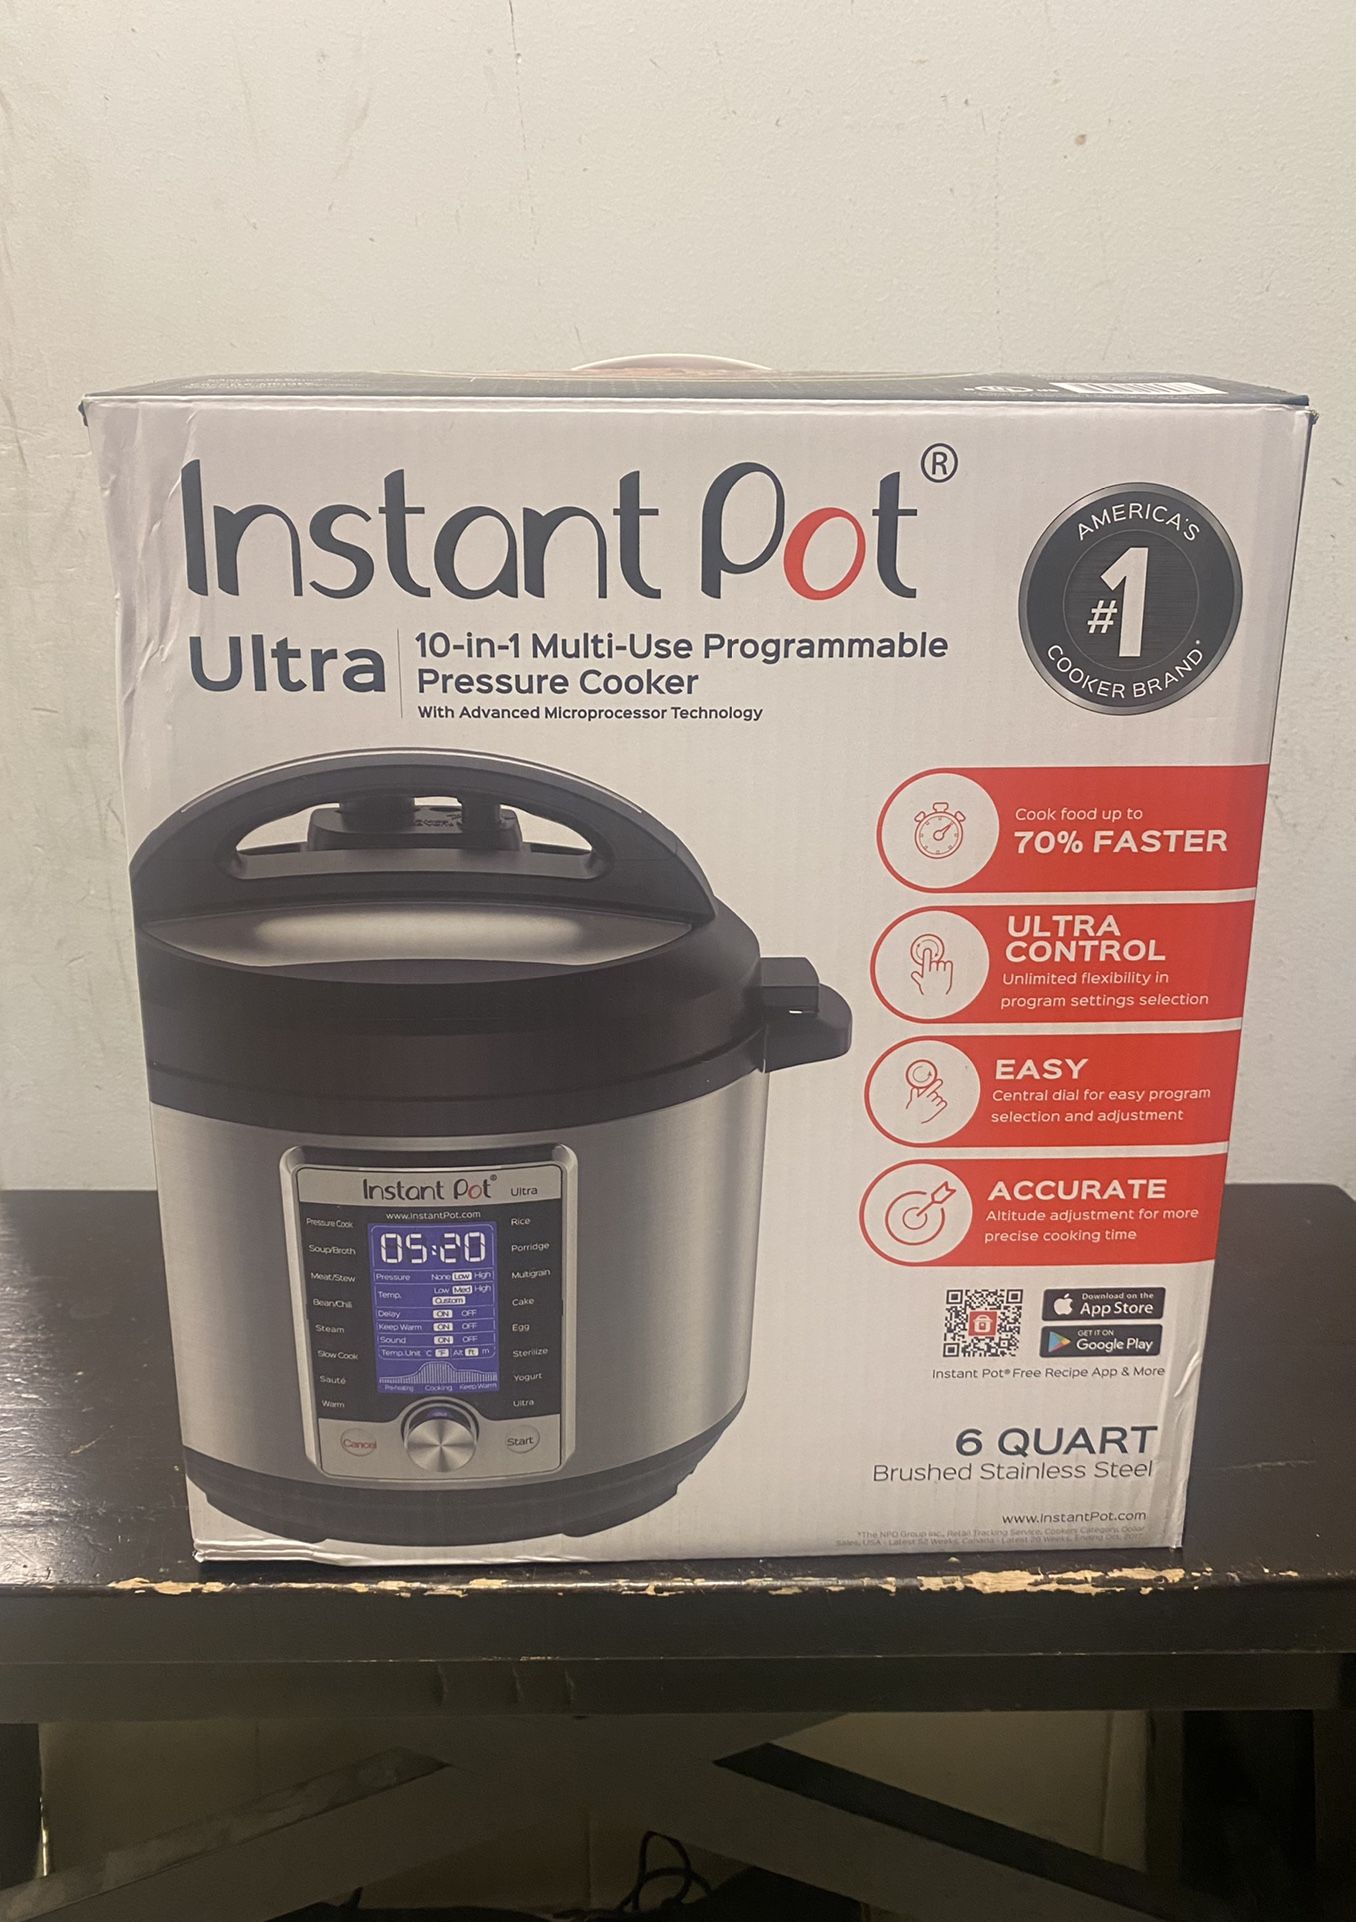 Instant Pot Ultra 10-in-1 8 Quart Multi-Use Programmable Pressure